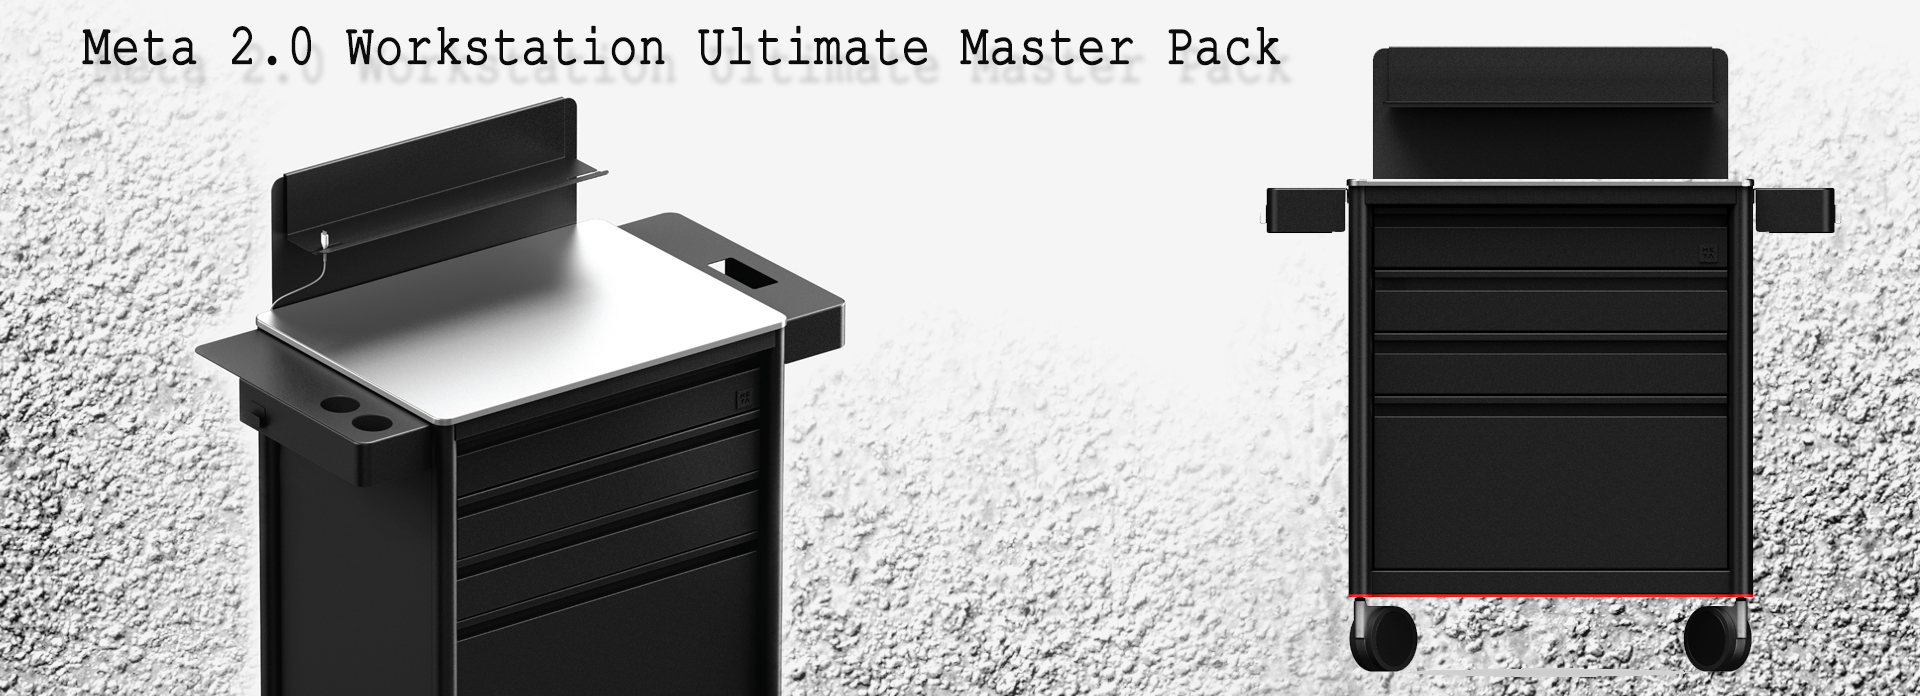 Meta 2.0 Workstation Ultimate Master Pack